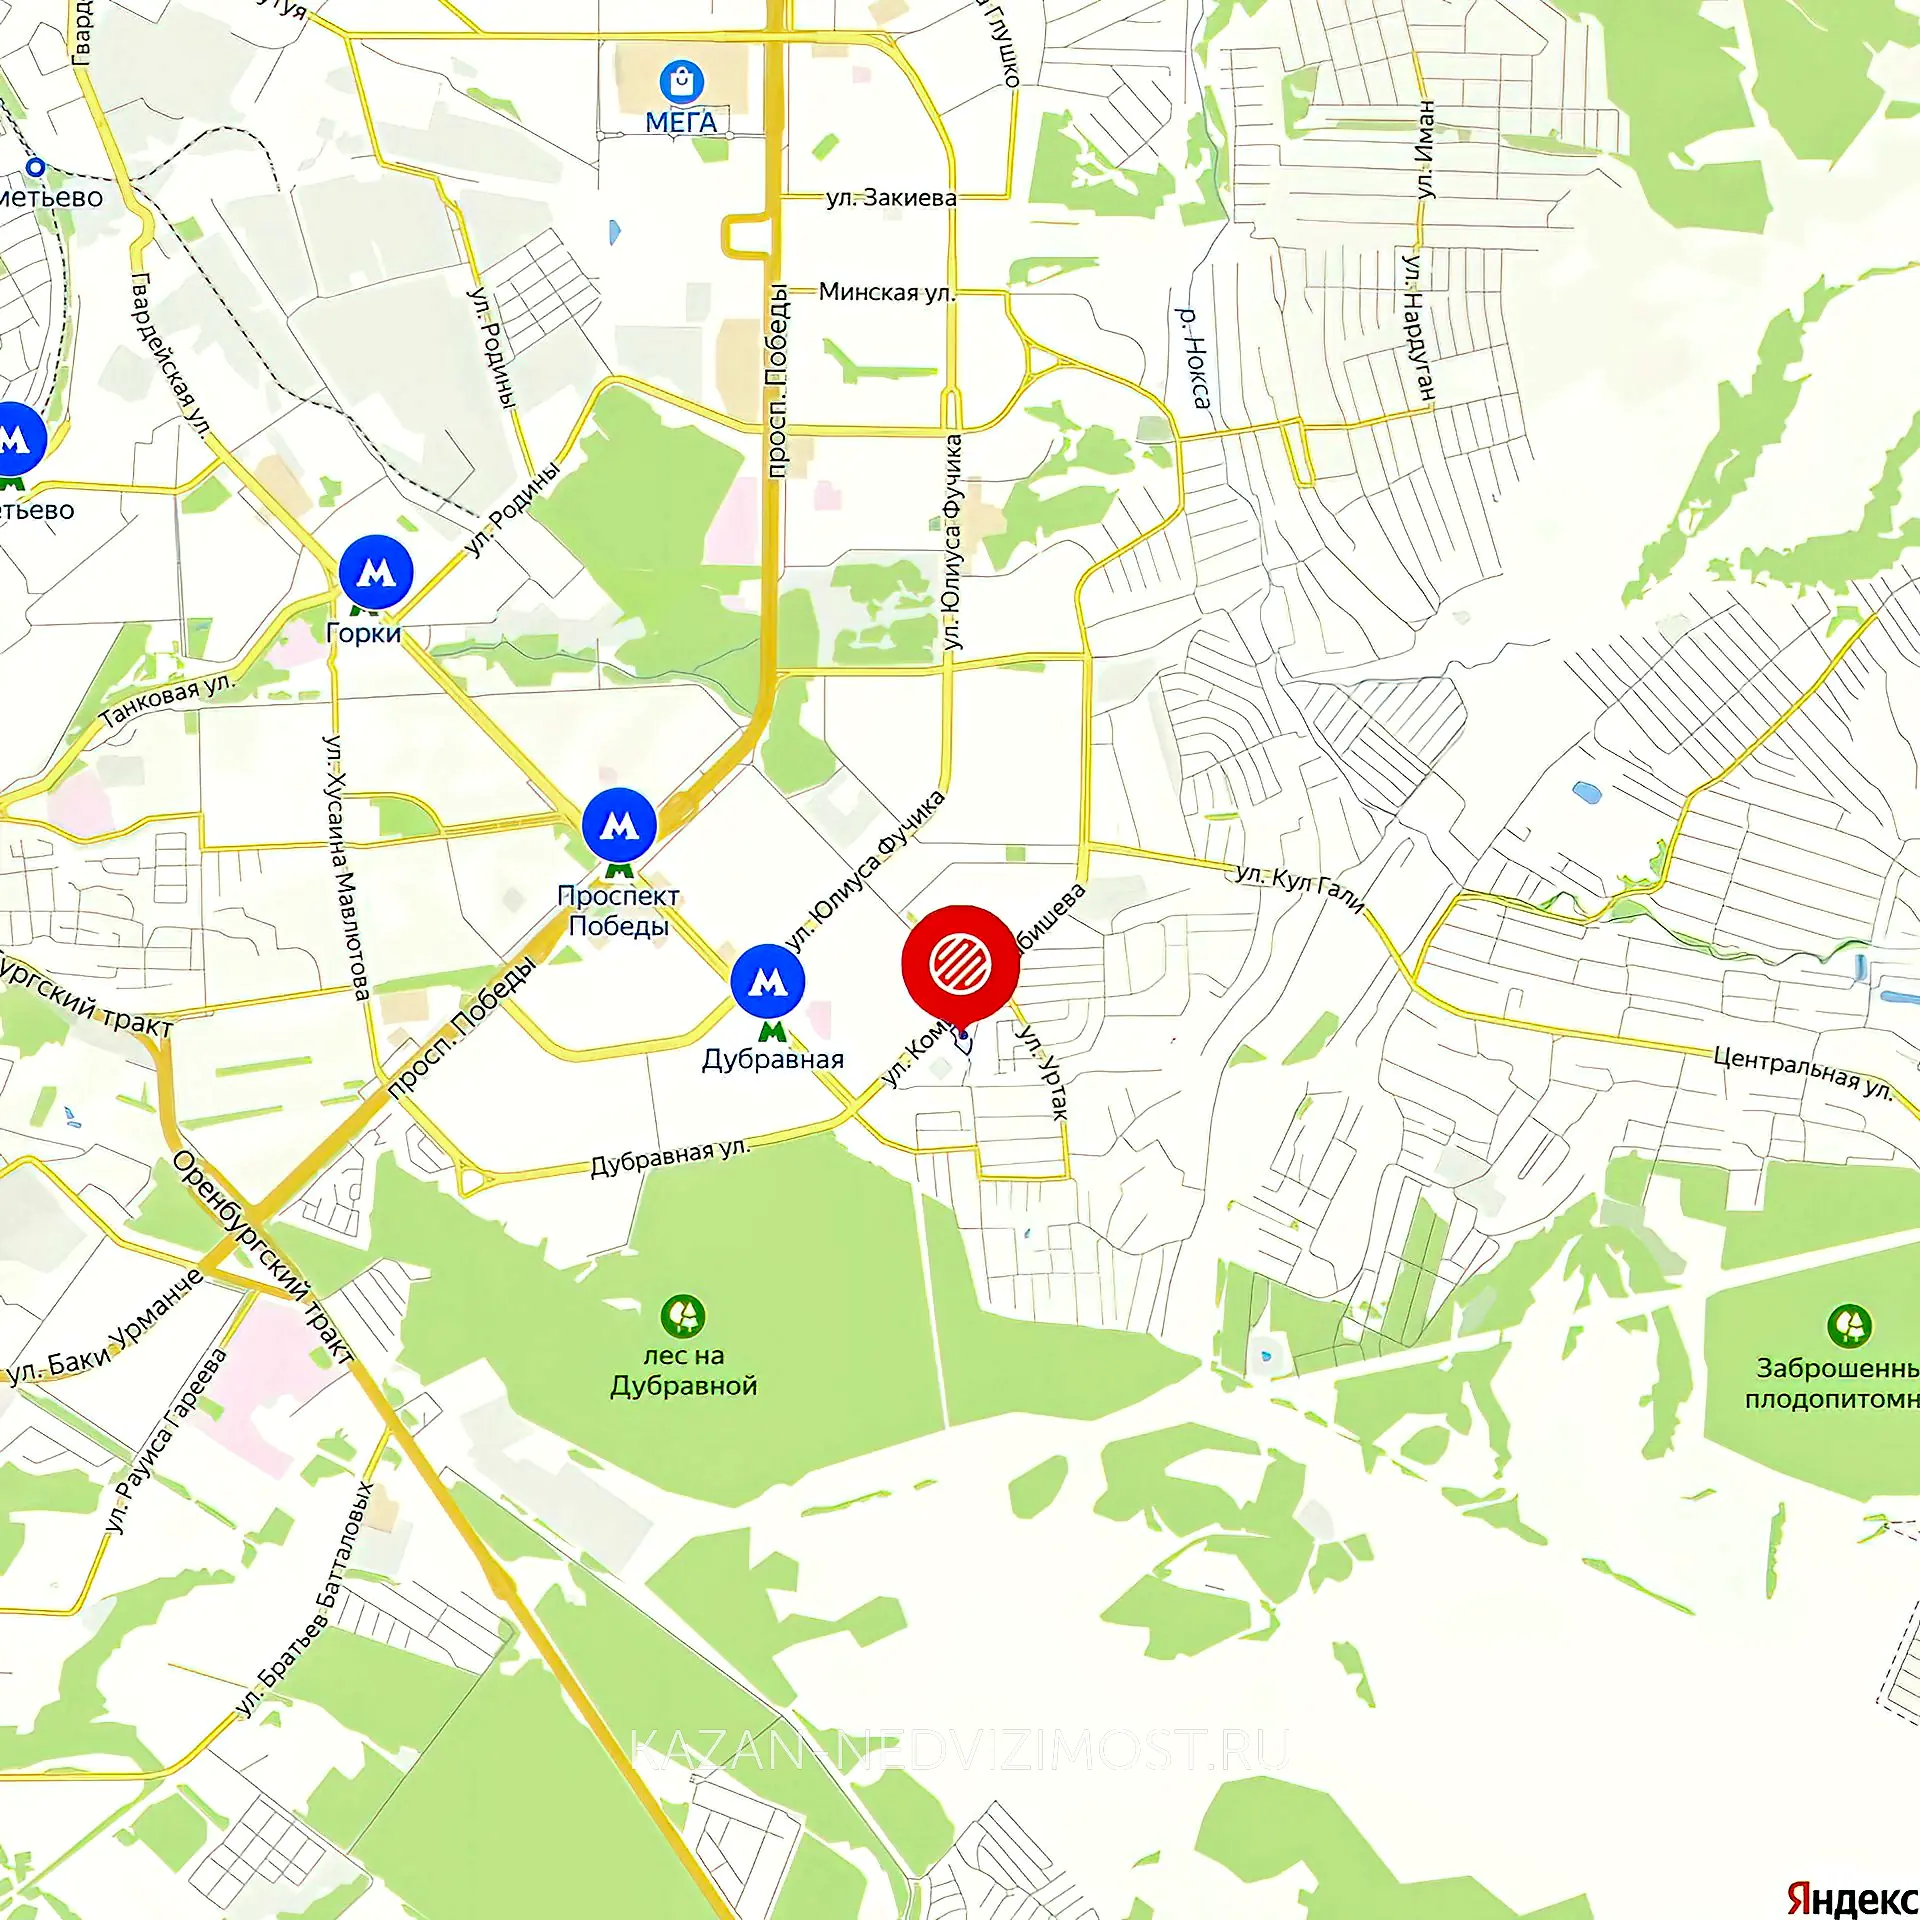 Расположение и маршрут на карте от ЖК Мелодия до центра города